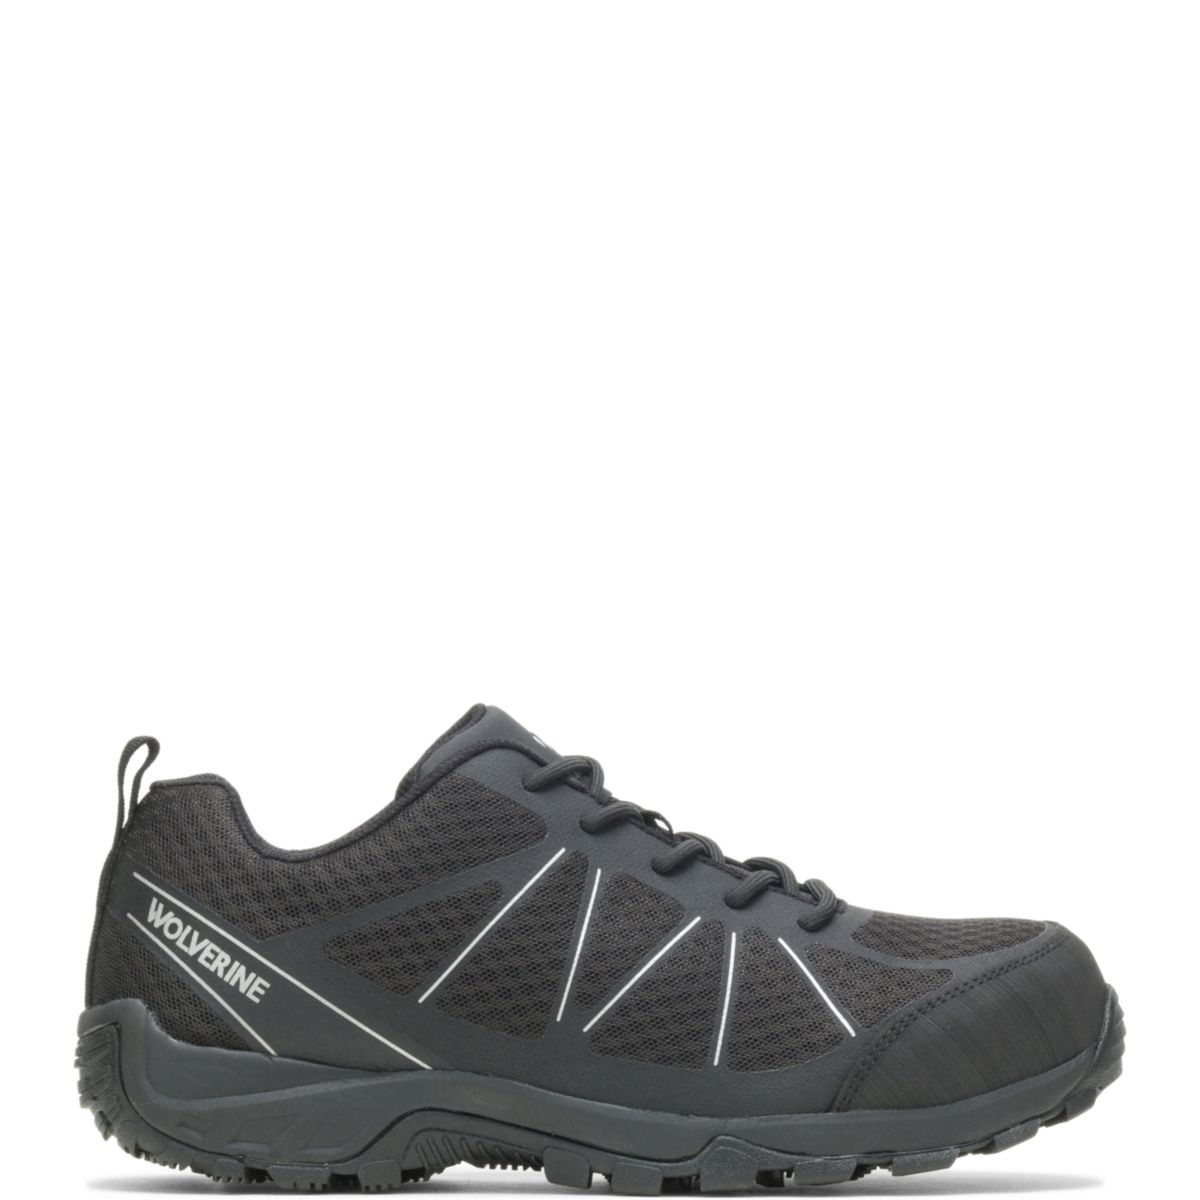 WOLVERINE Men's Amherst II CarbonMAXÂ® Composite Toe Work Shoe Black - W201147 BLACK - BLACK, 12 X-Wide